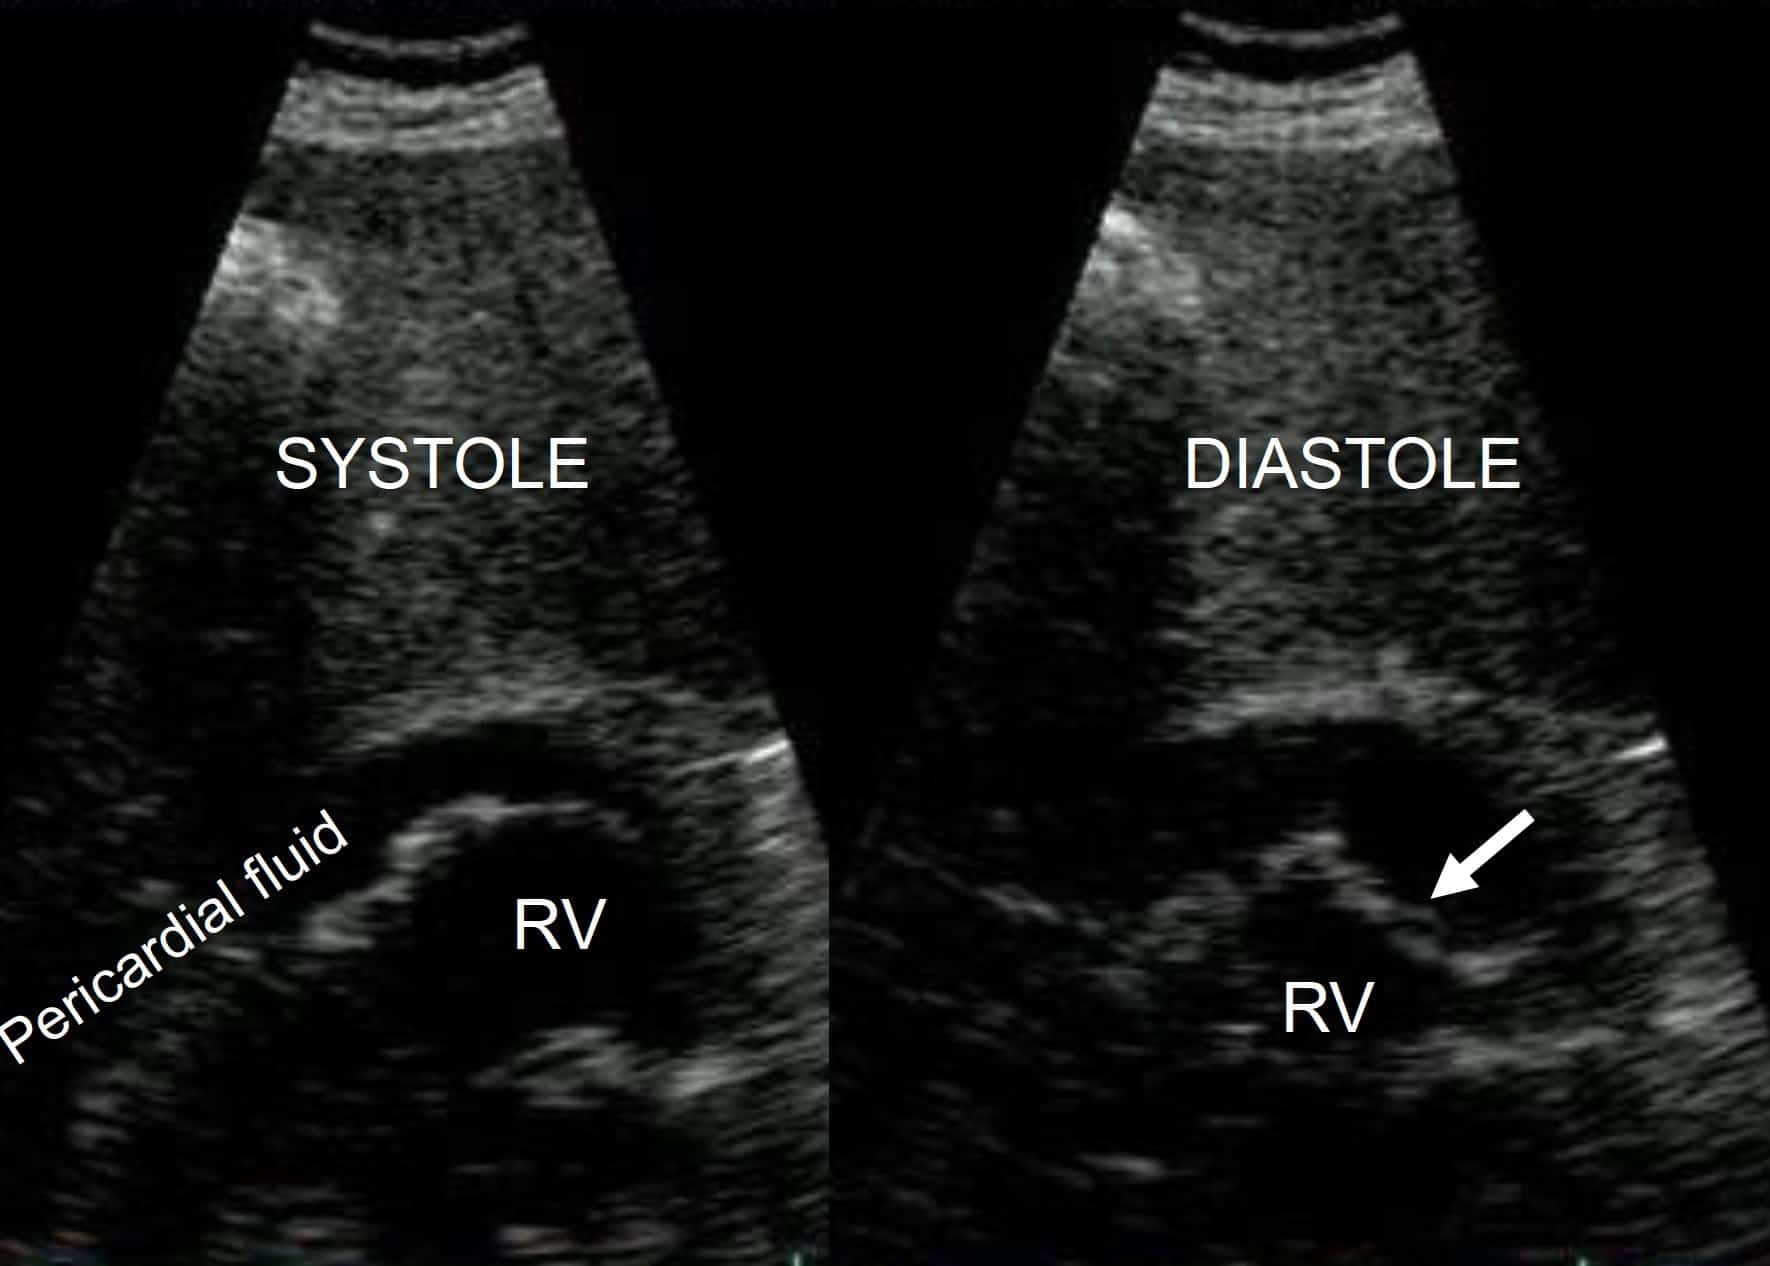 Tamponade - subcostal view - RV collapse in diastole (arrowed)